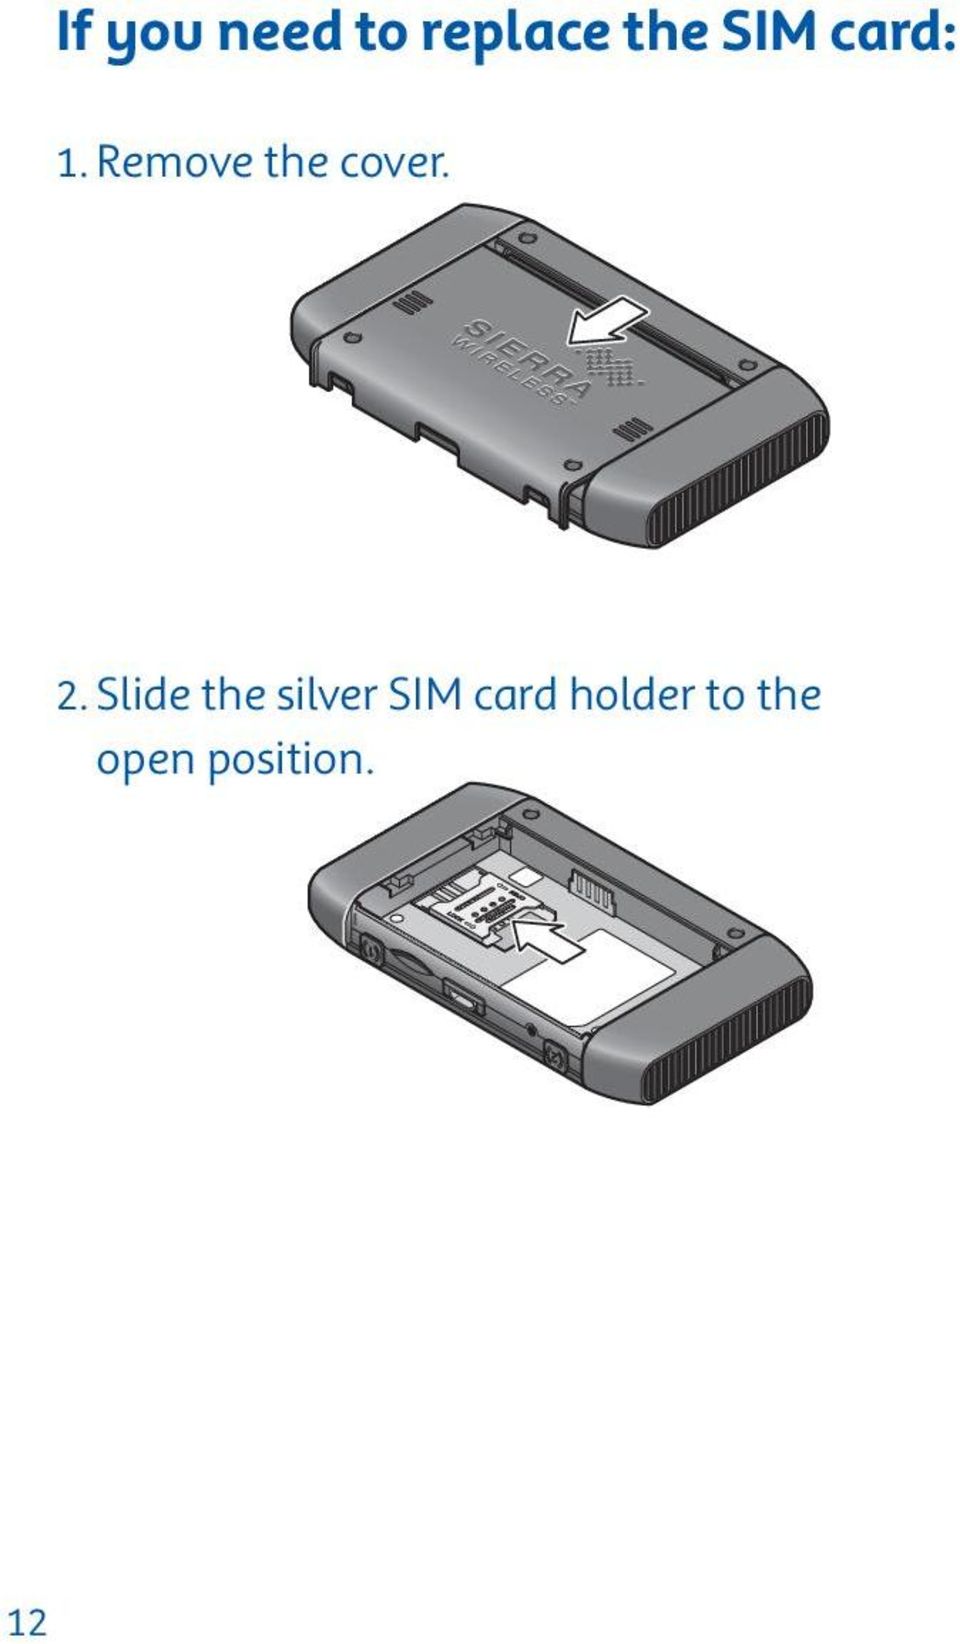 2. Slide the silver SIM card